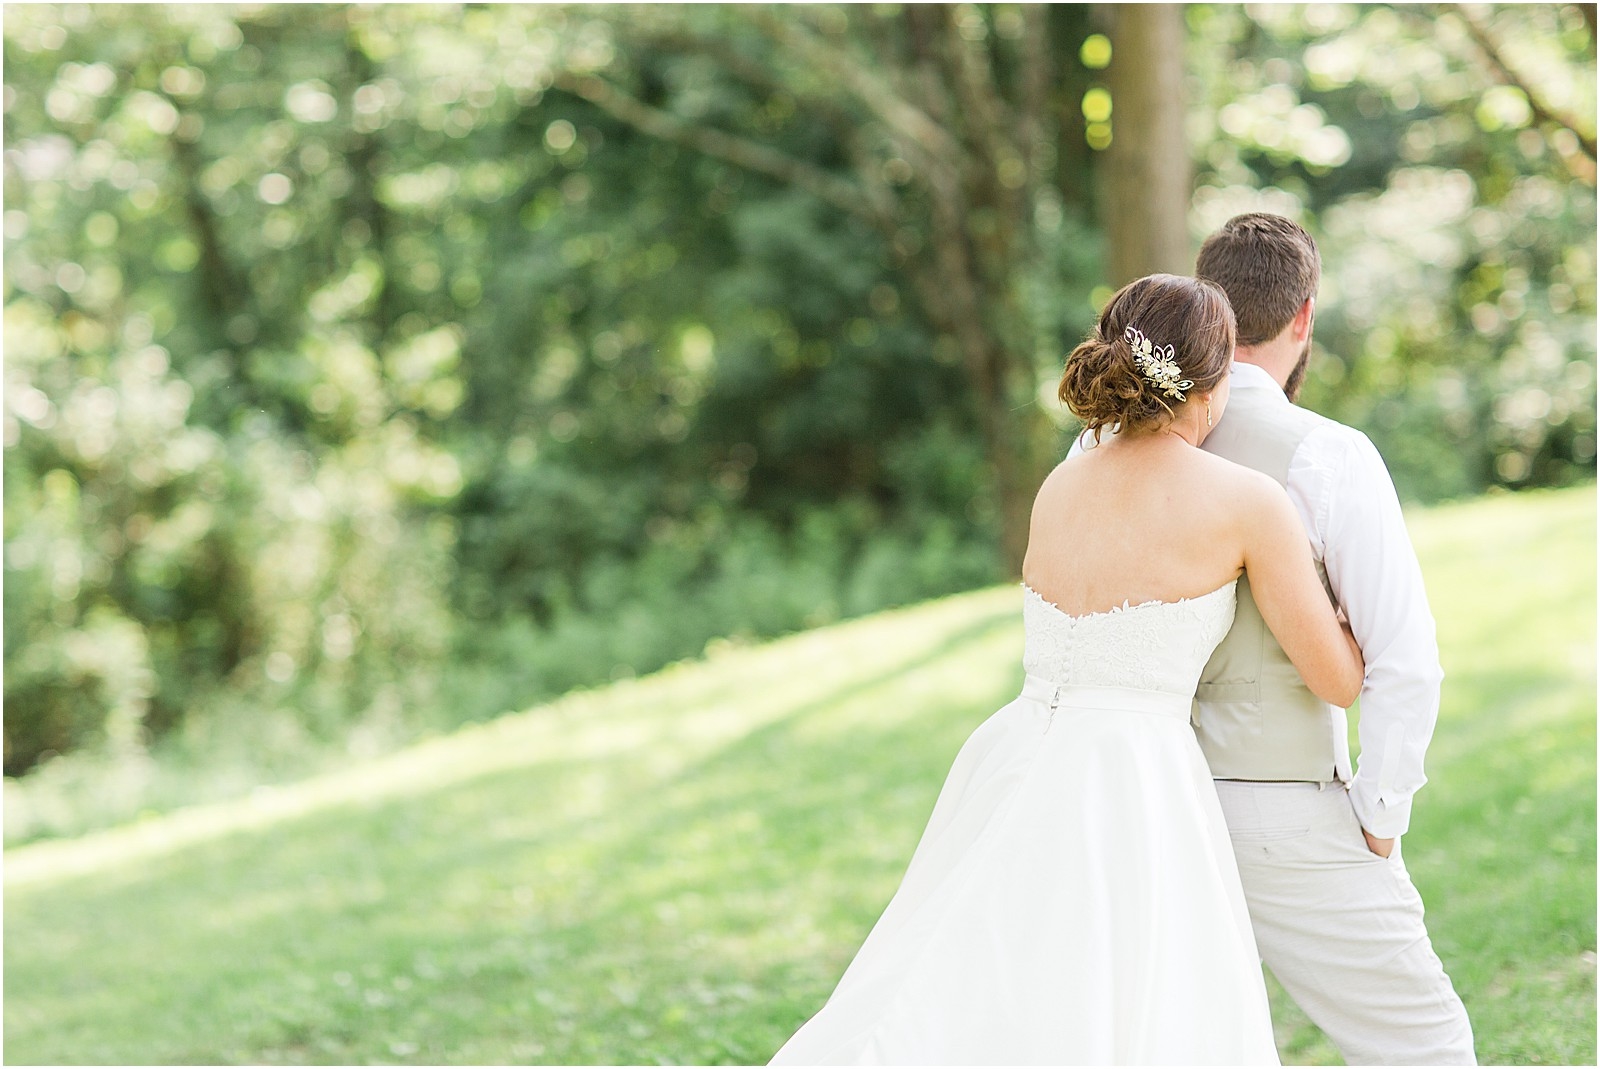 A Evansville Indiana Backyard Wedding | Bailey and Ben 021.jpg